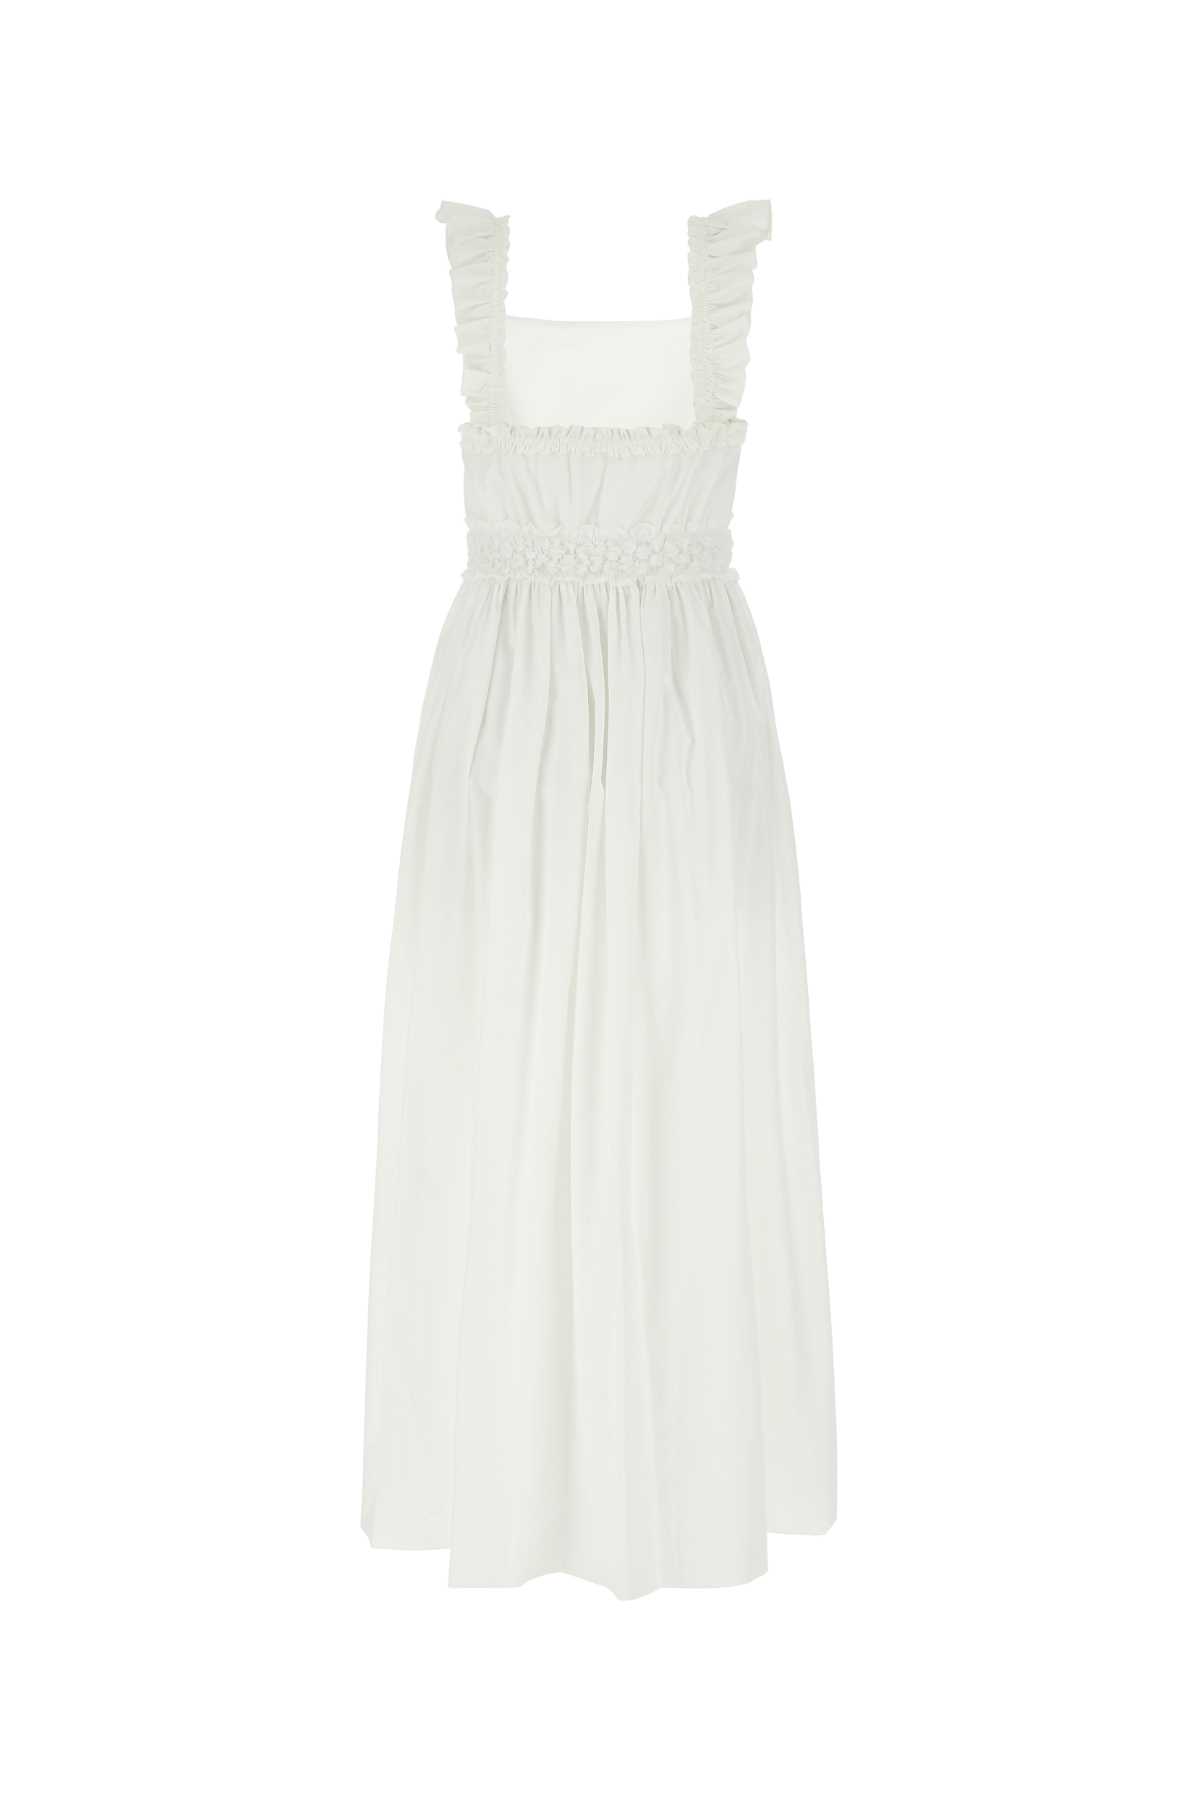 Chloé White Cotton Dress In 101